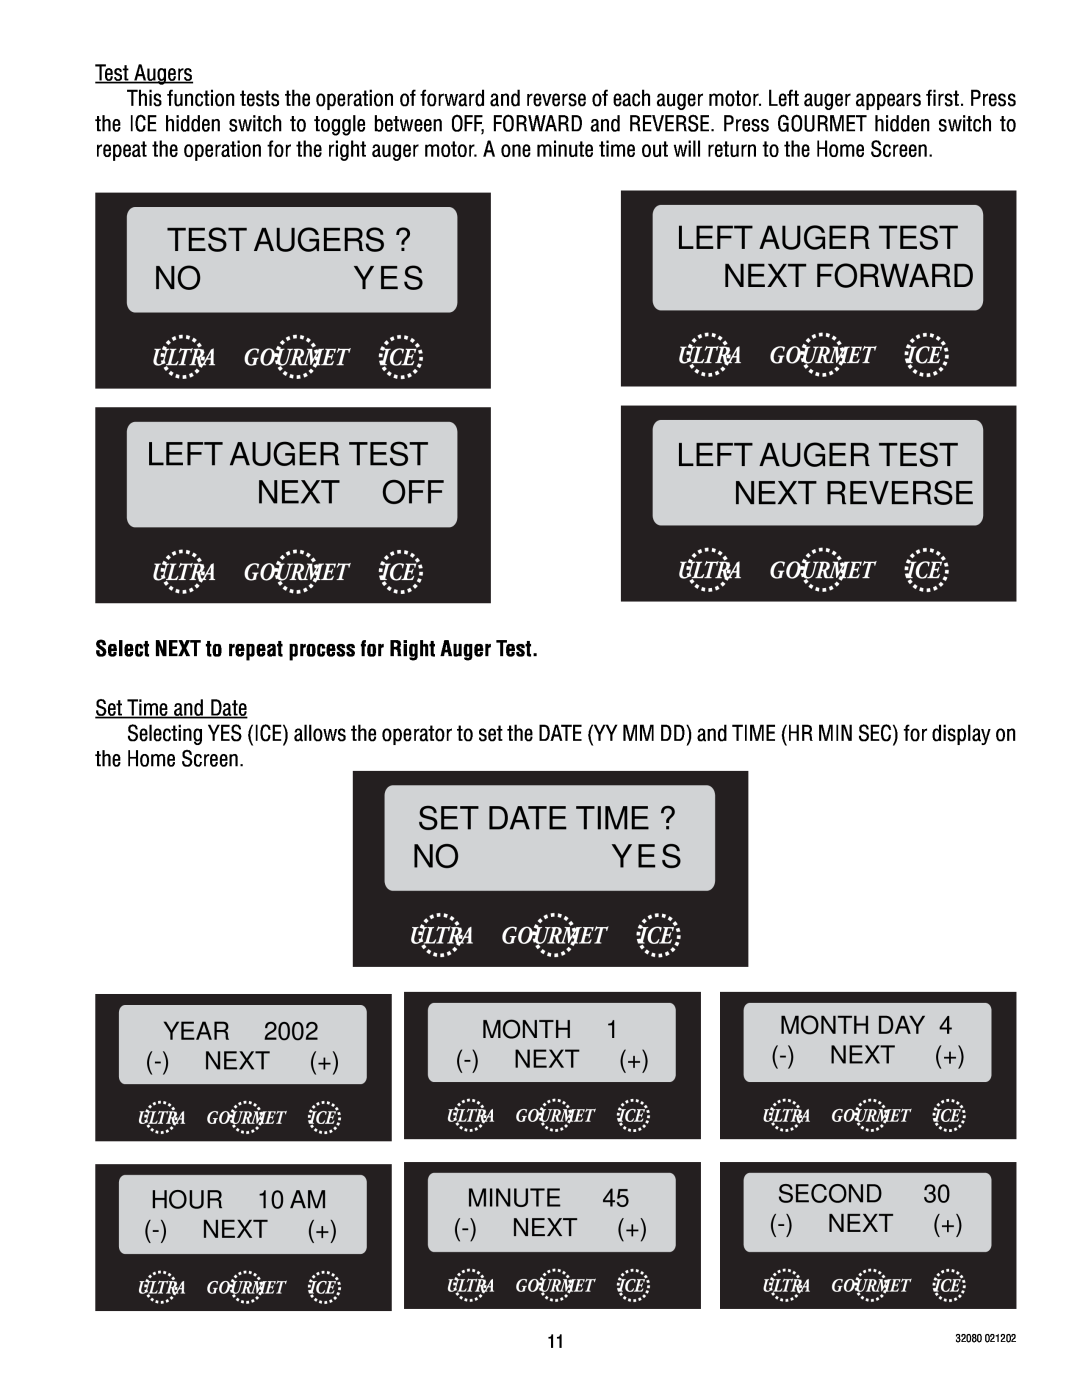 Bunn ULTRA-2 manual Test Augers ?, Left Auger Test, Next Off, Next Reverse, Set Date Time ? No Yes, Next Forward 